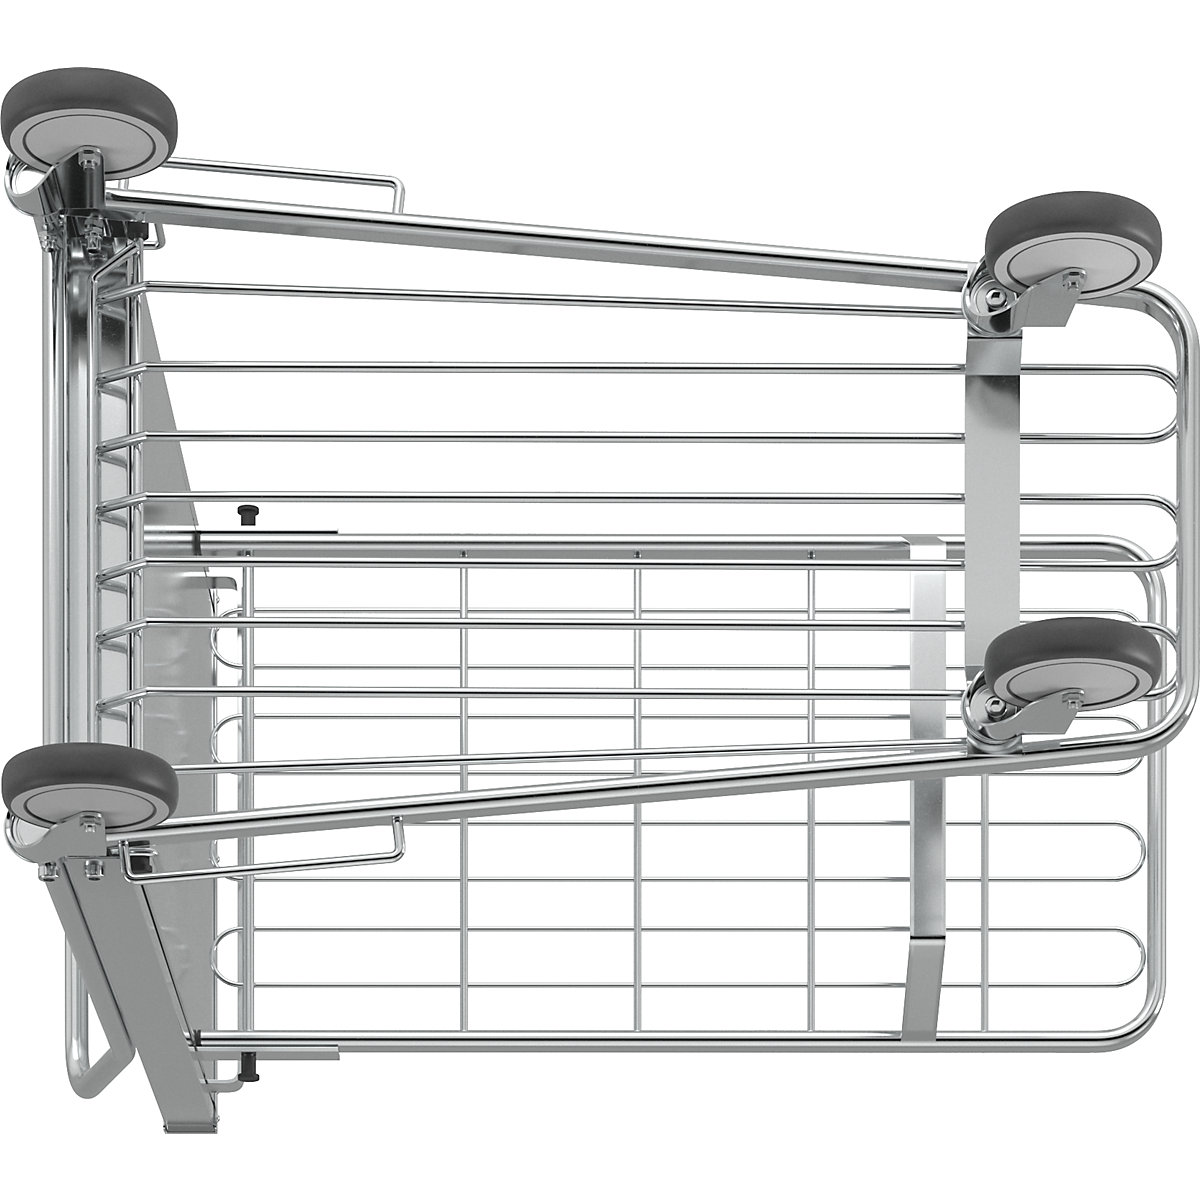 Shopping trolley, zinc plated – Kongamek (Product illustration 7)-6